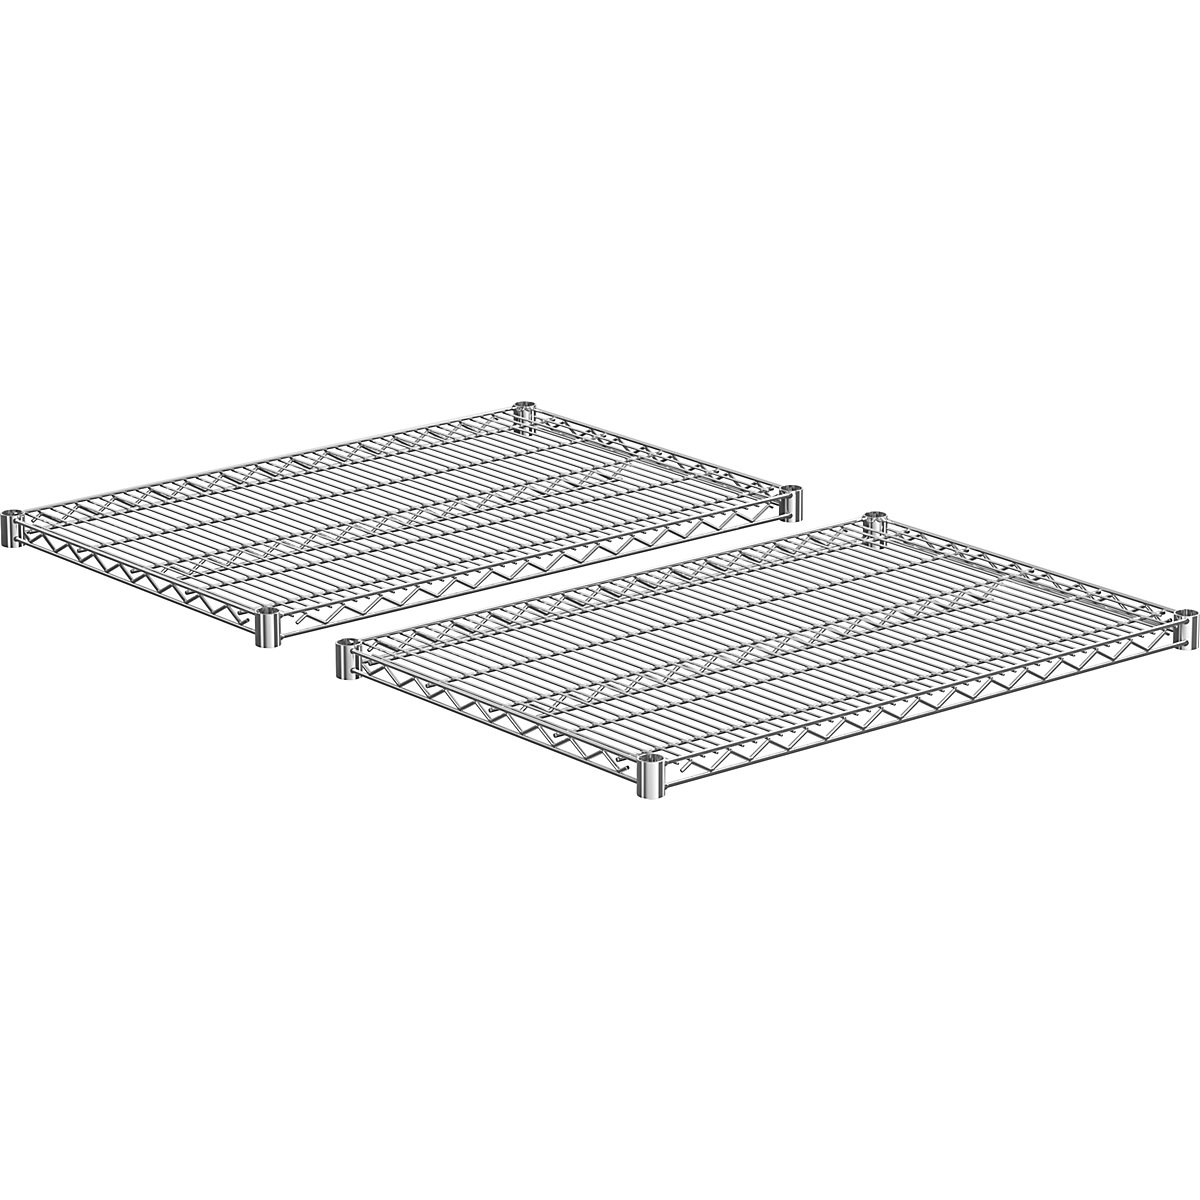 Shelf for steel mesh shelf unit, chrome plated, max. shelf load 250 kg, width 910 mm, depth 610 mm, pack of 2